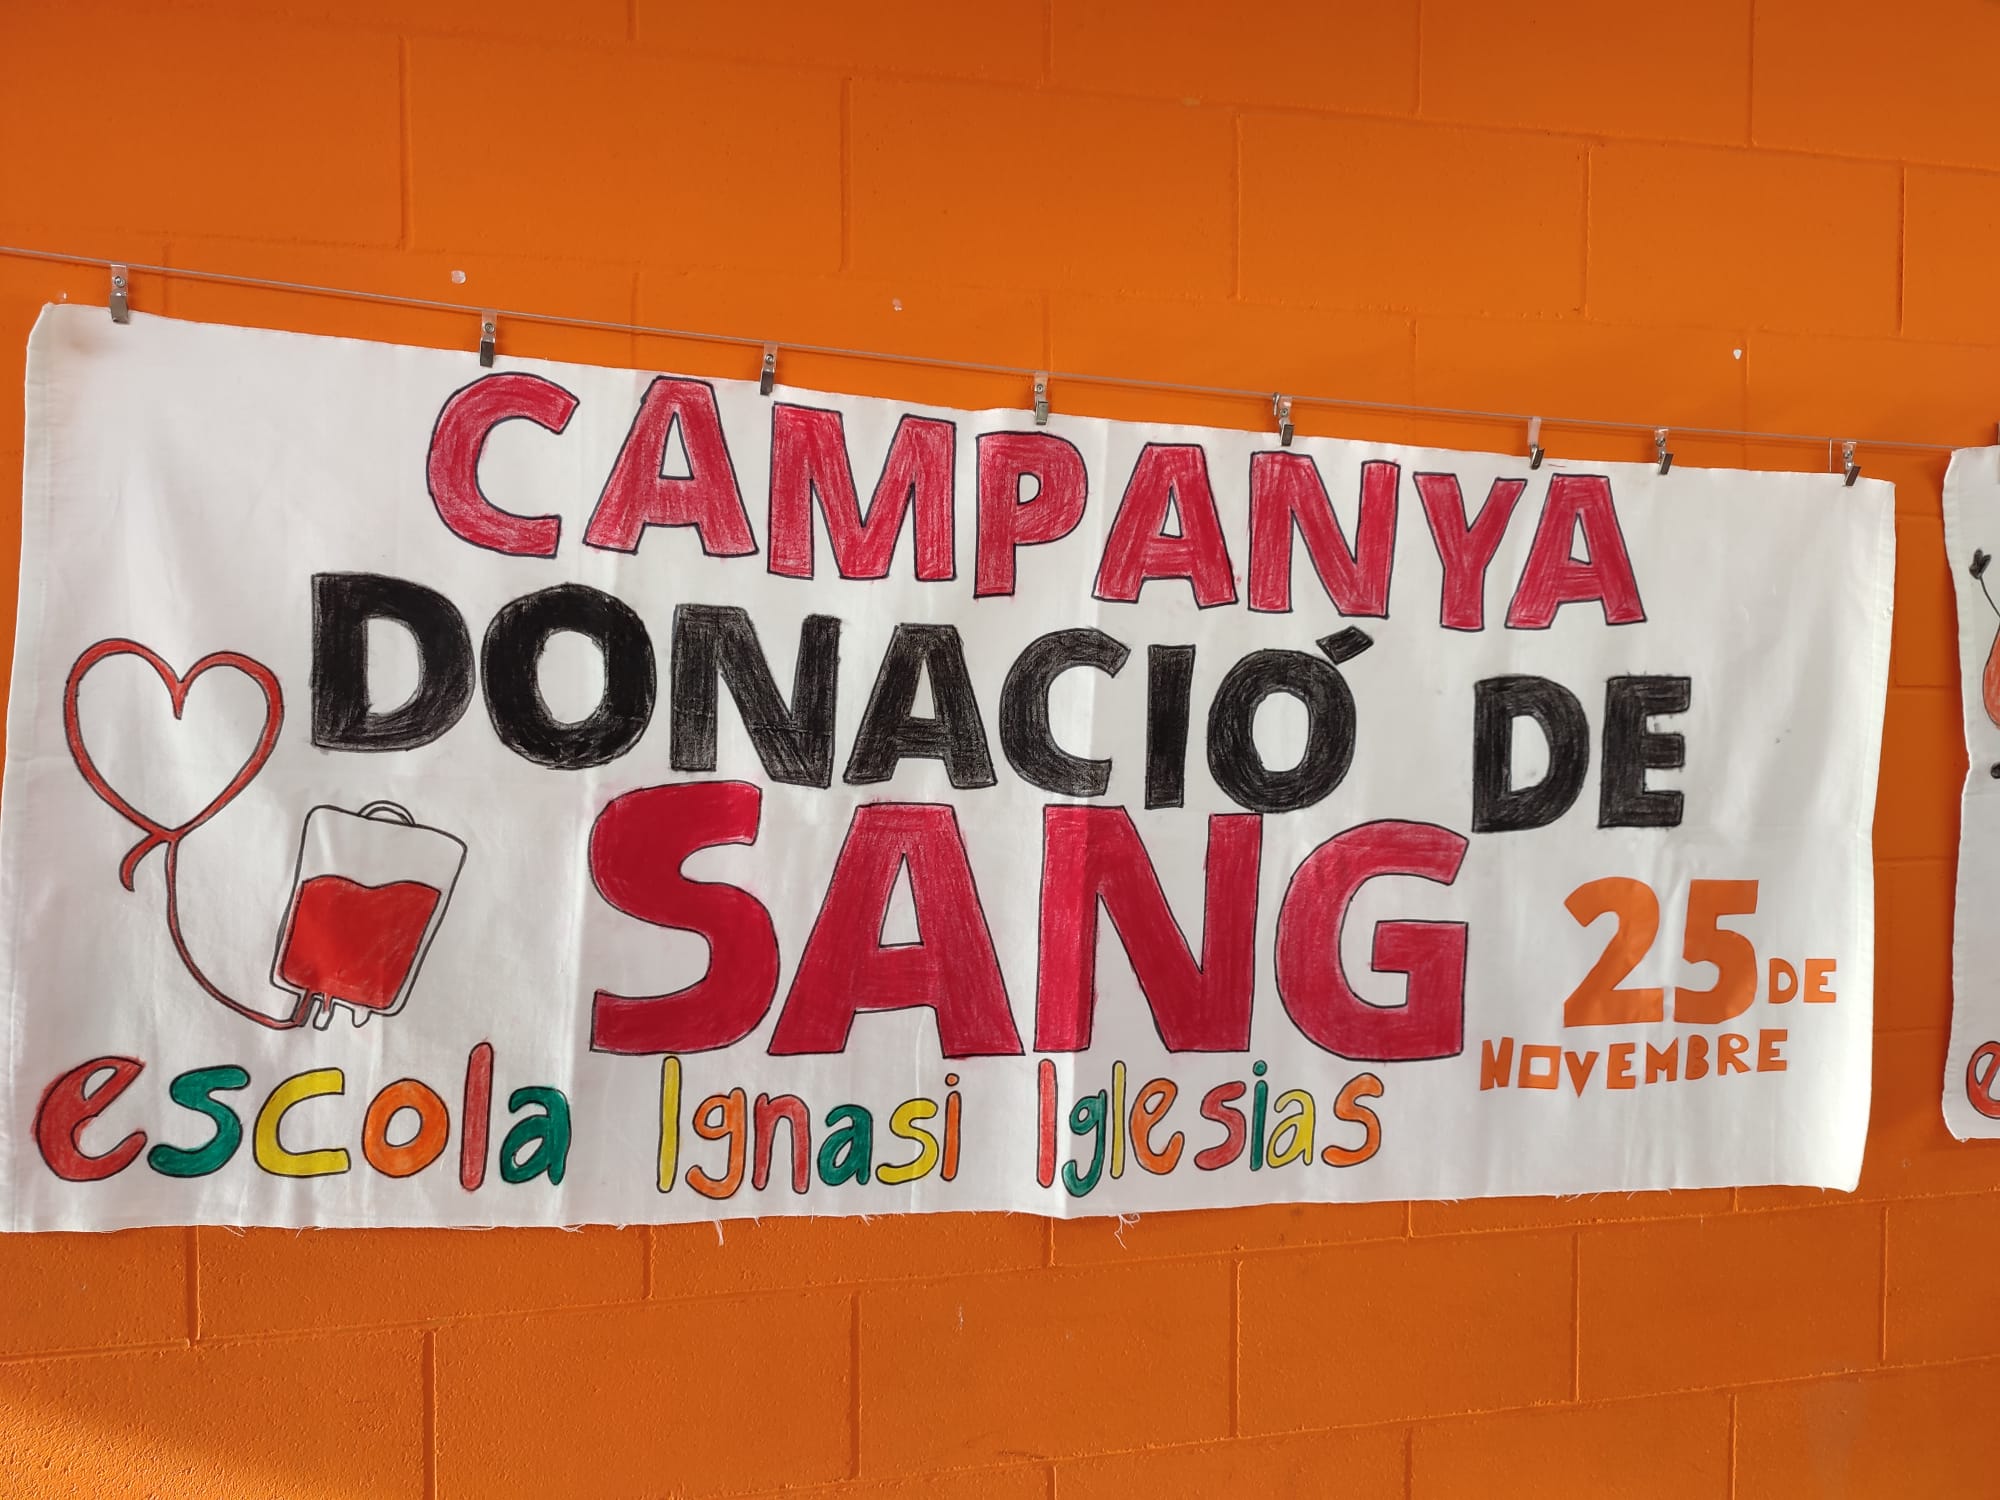 L'escola Ignasi Iglesias participa en la campanya 